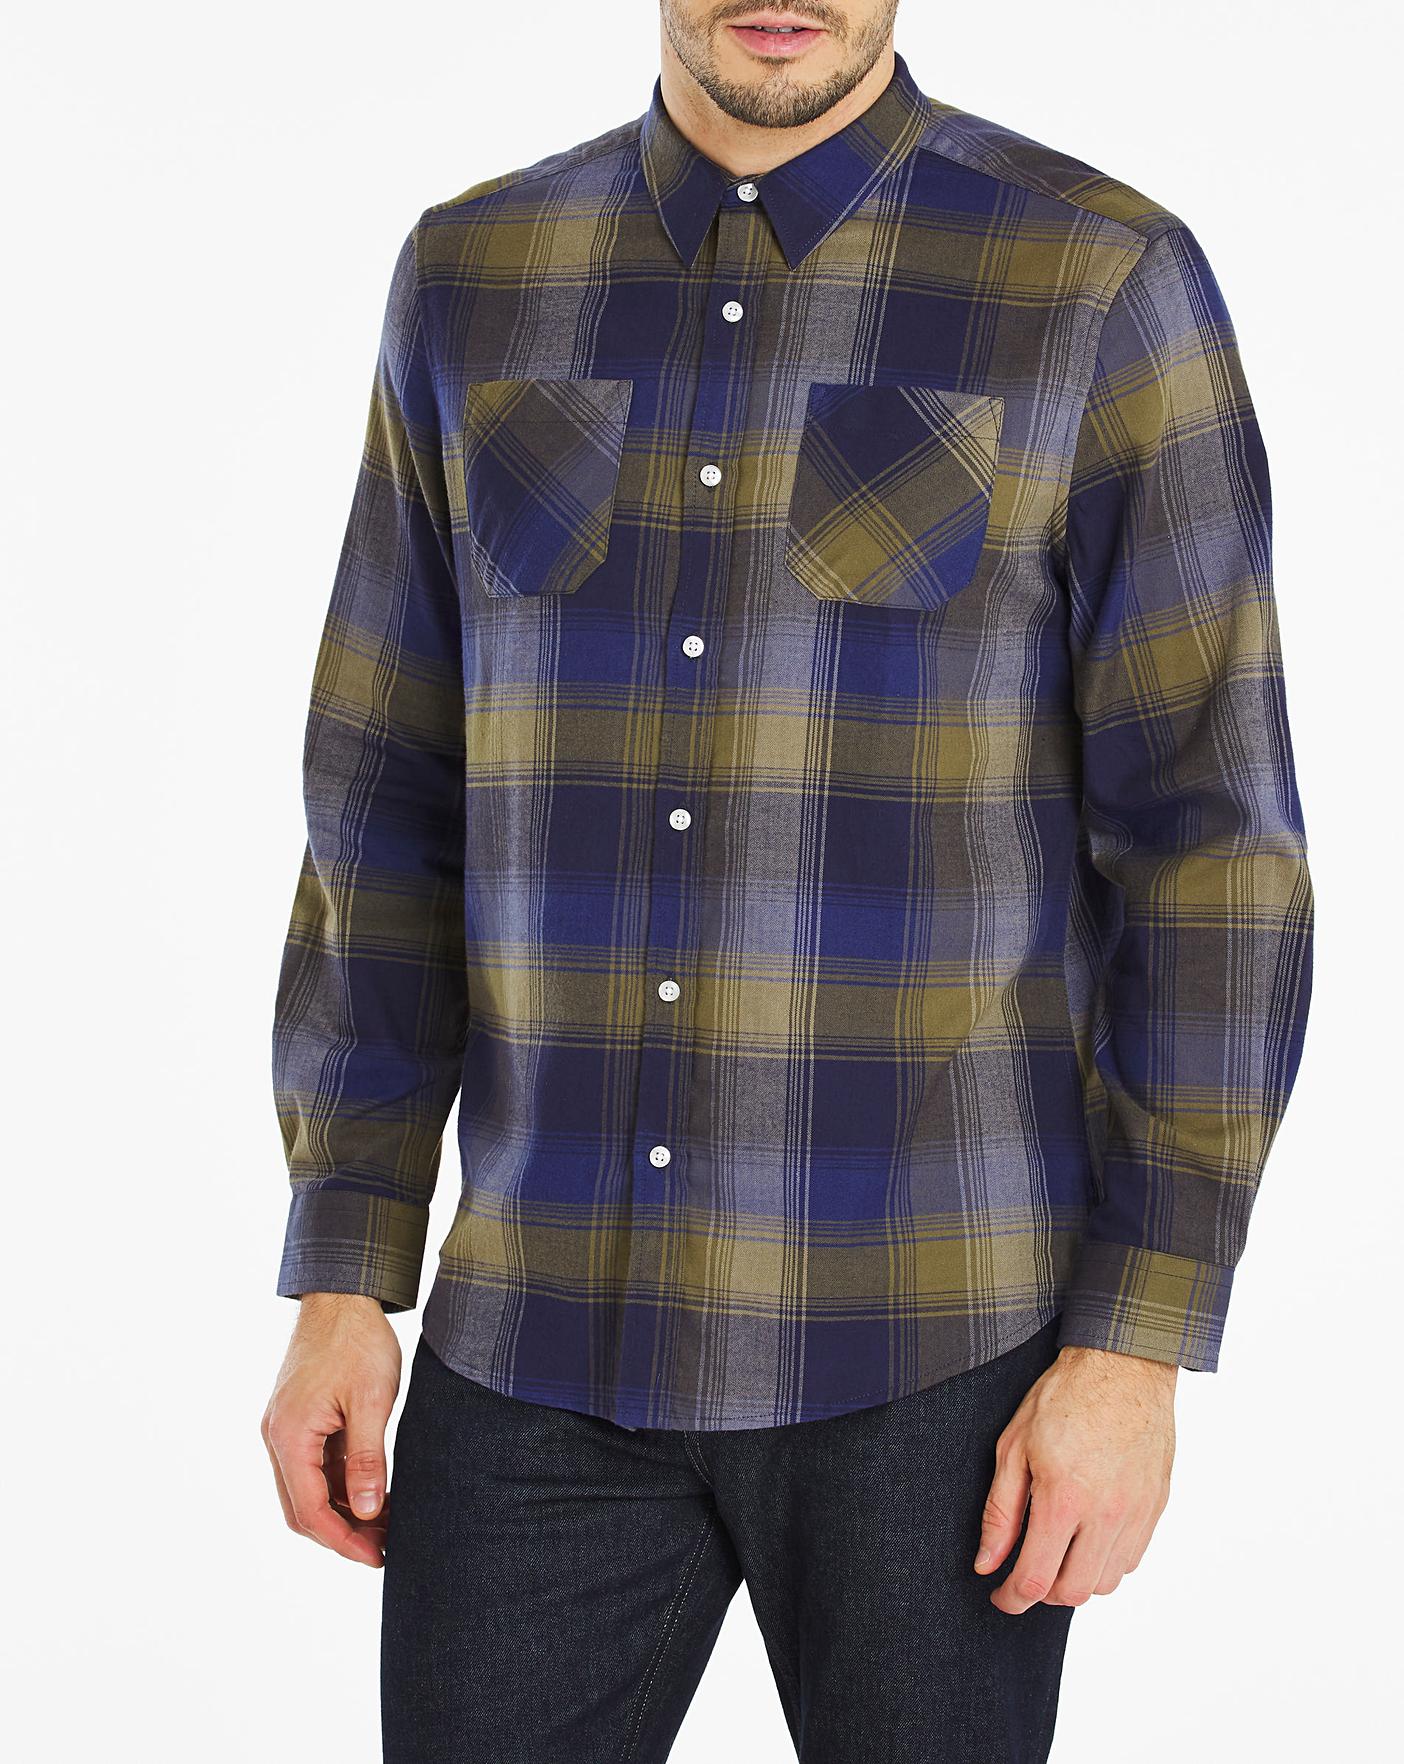 denim and flannel shirt